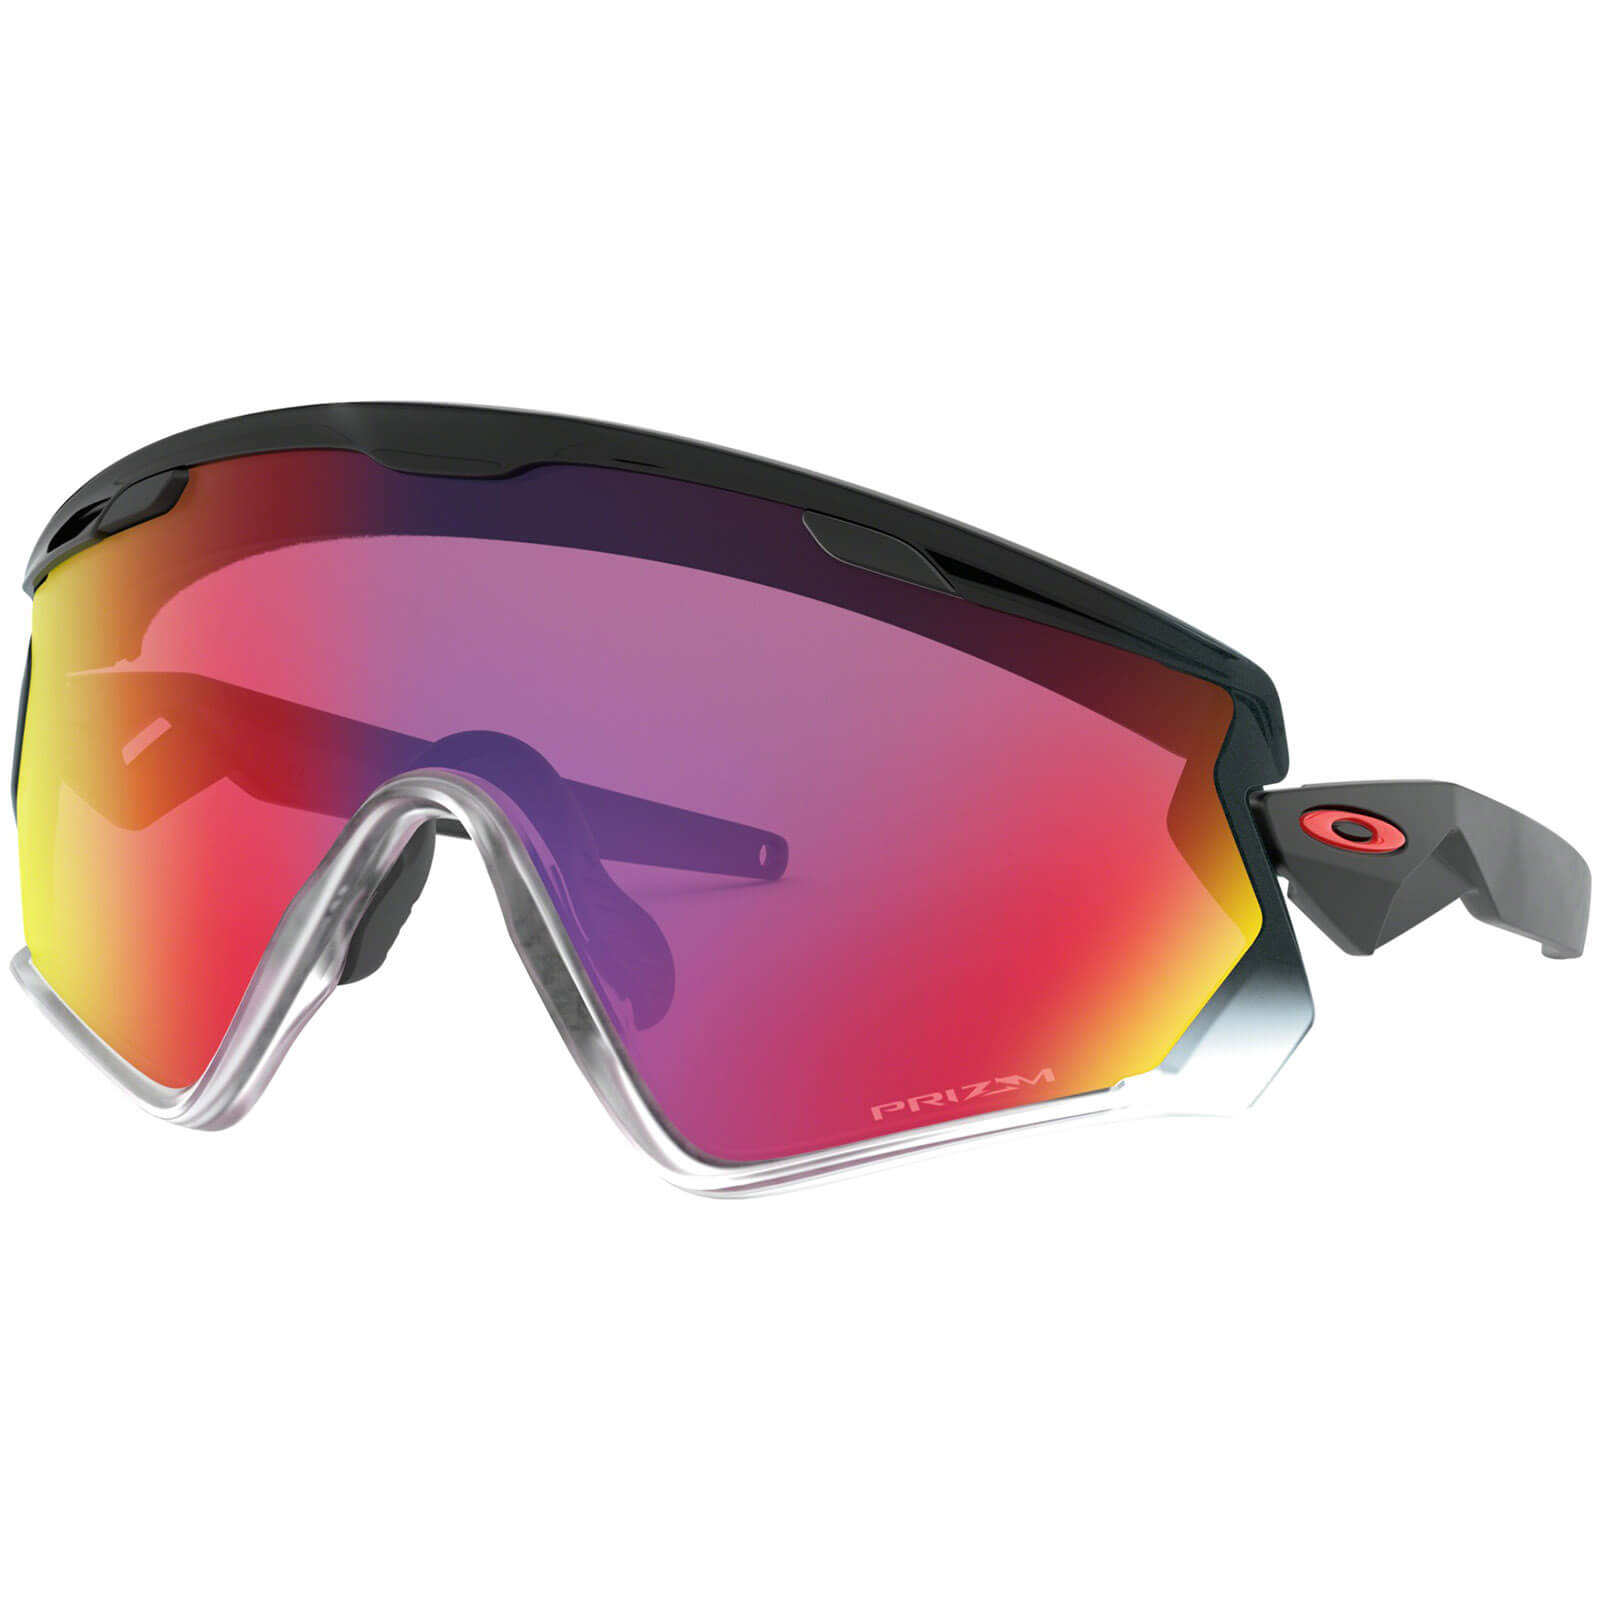 Oakley Wind Jacket 2.0 Sunglasses - Black Fade/Prizm Road